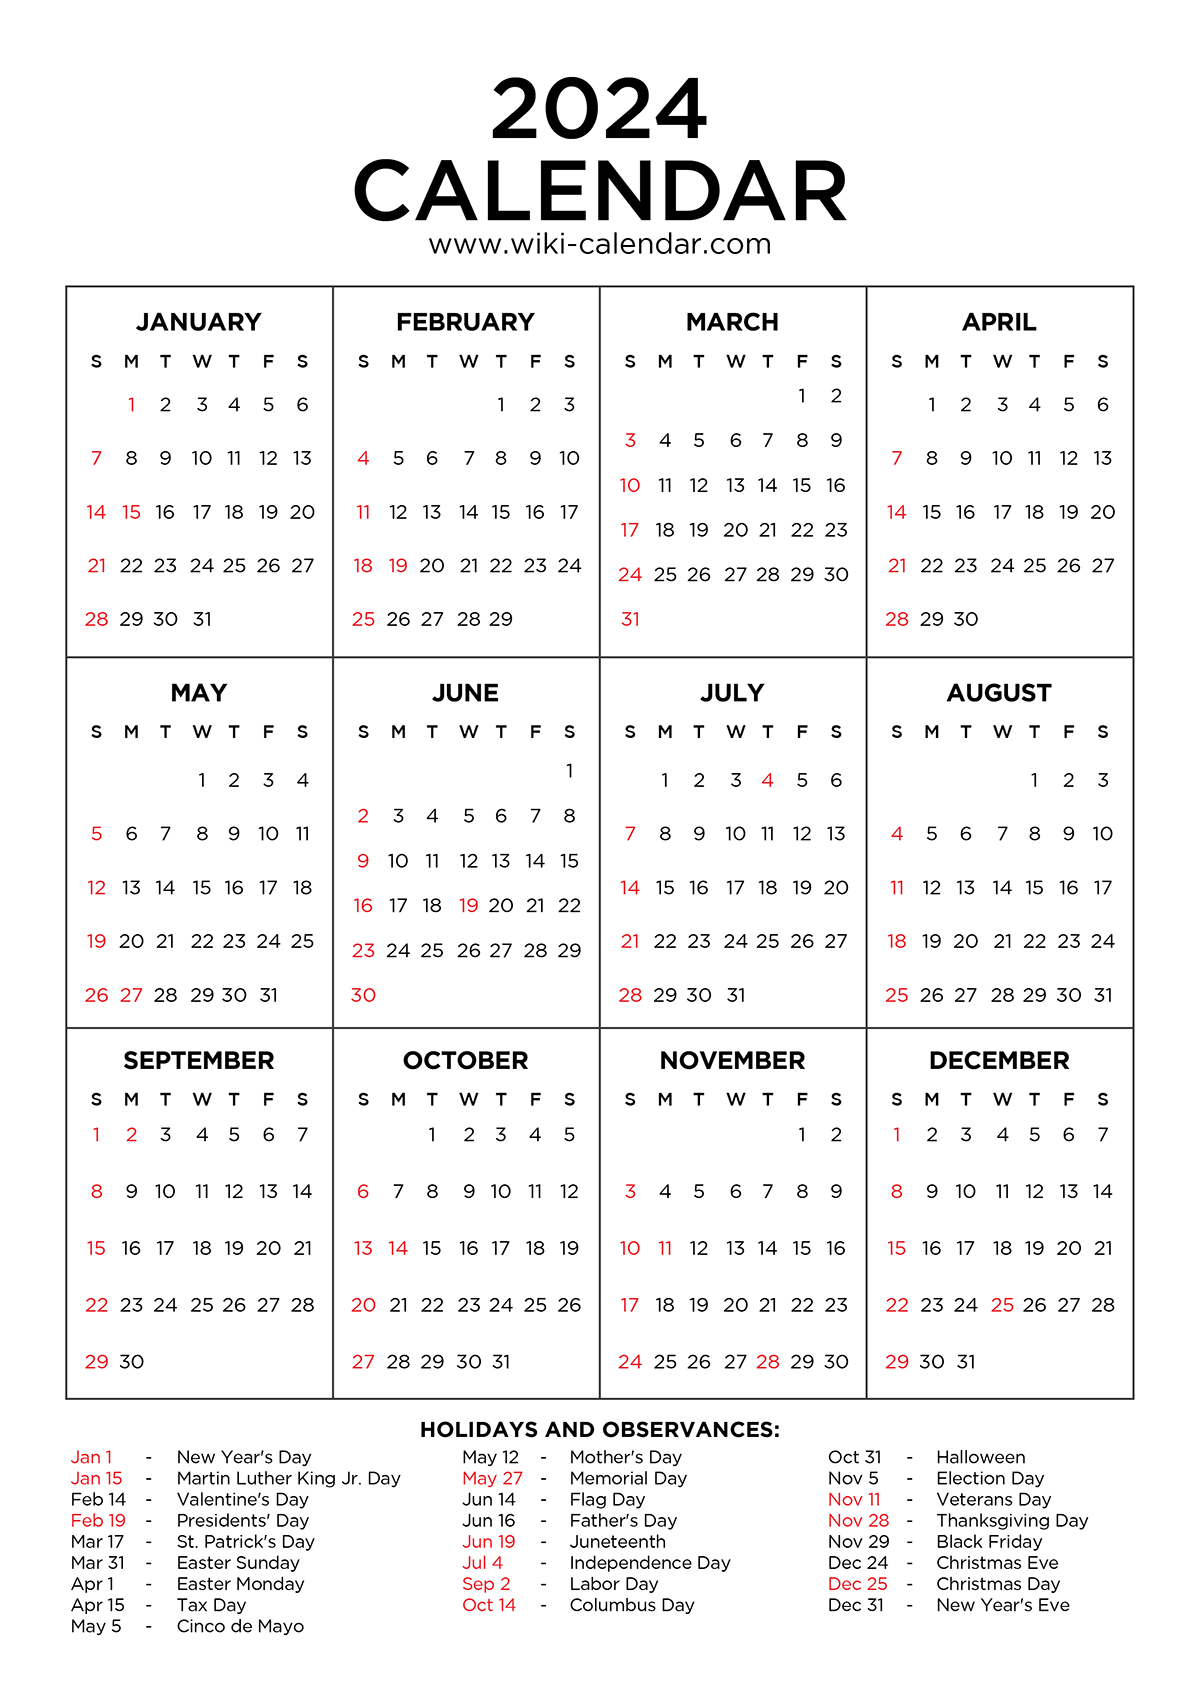 Year 2024 Calendar Printable With Holidays - Wiki Calendar for Free Printable Calendar 2024With Holidays